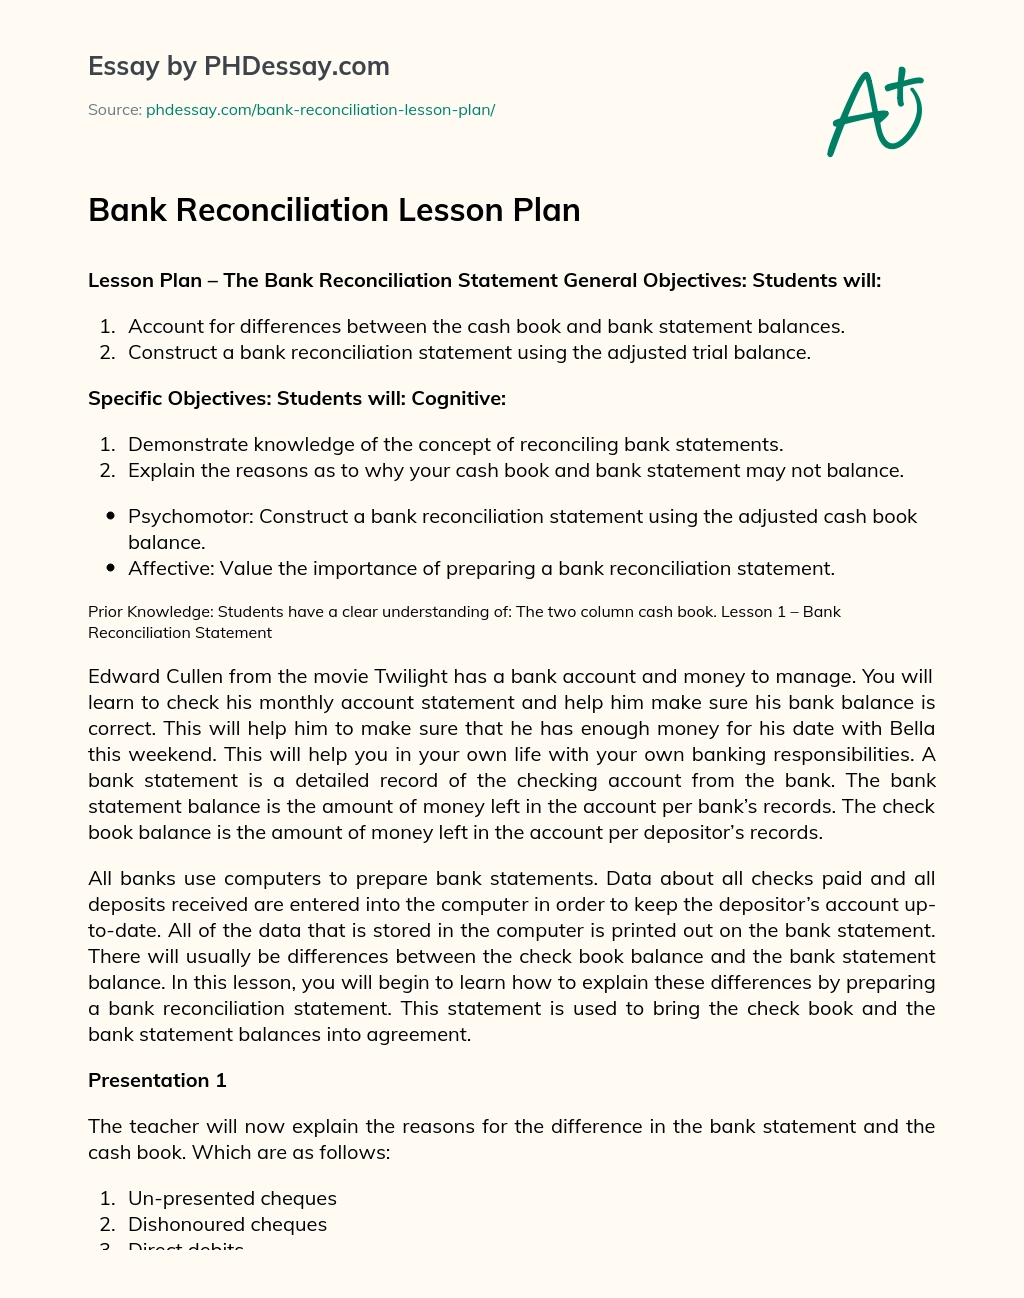 Bank Reconciliation Lesson Plan essay